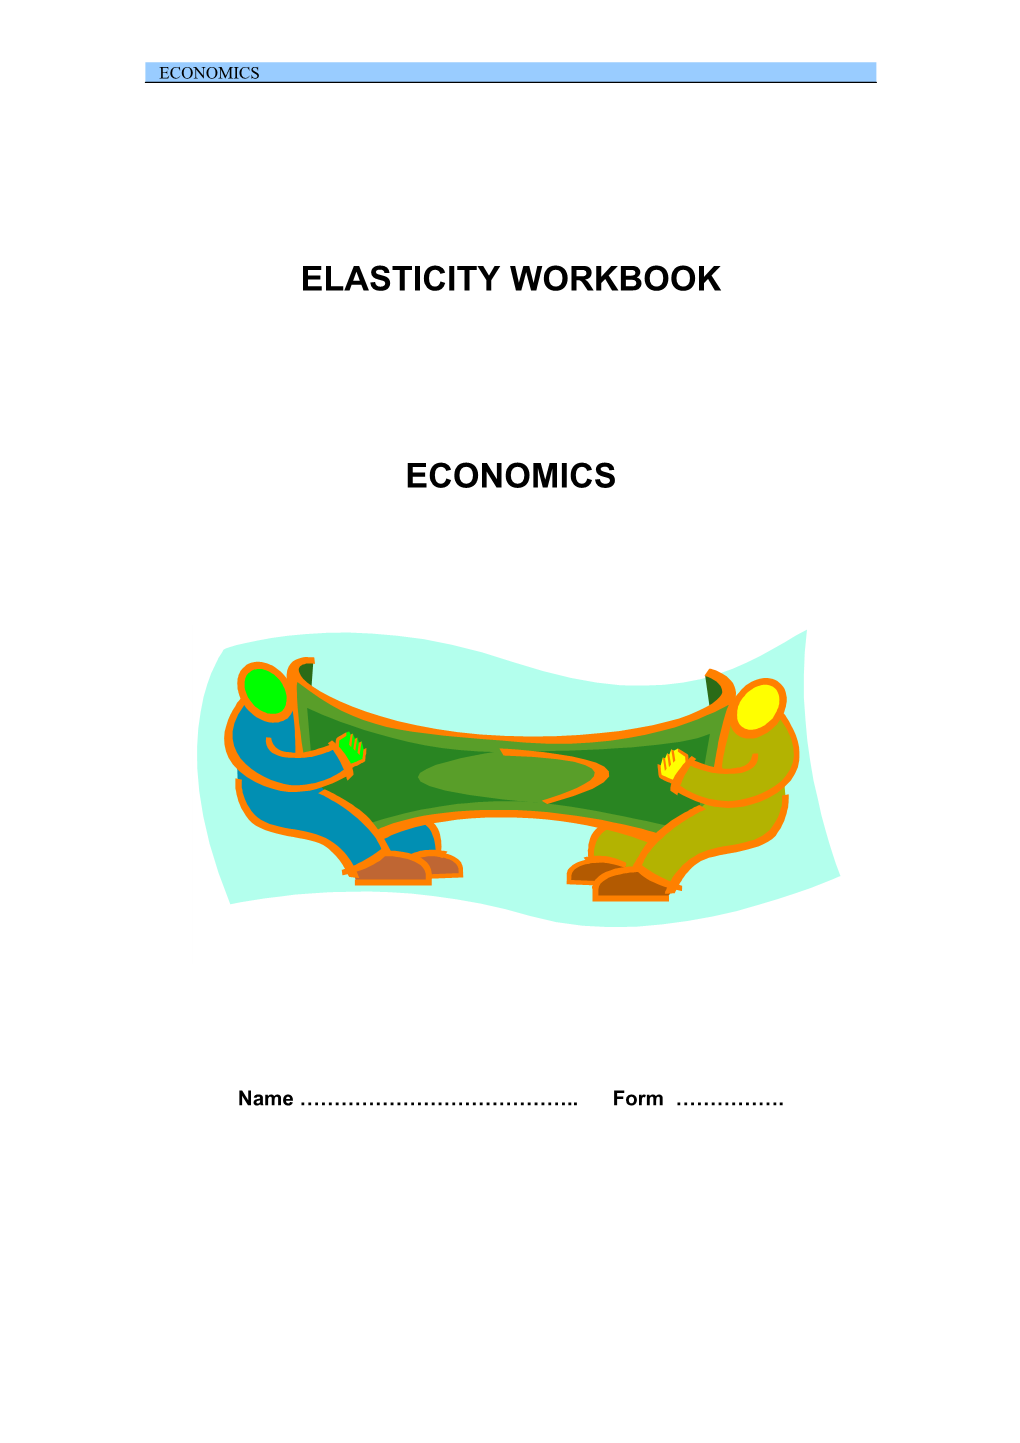 Elasticity Workbook